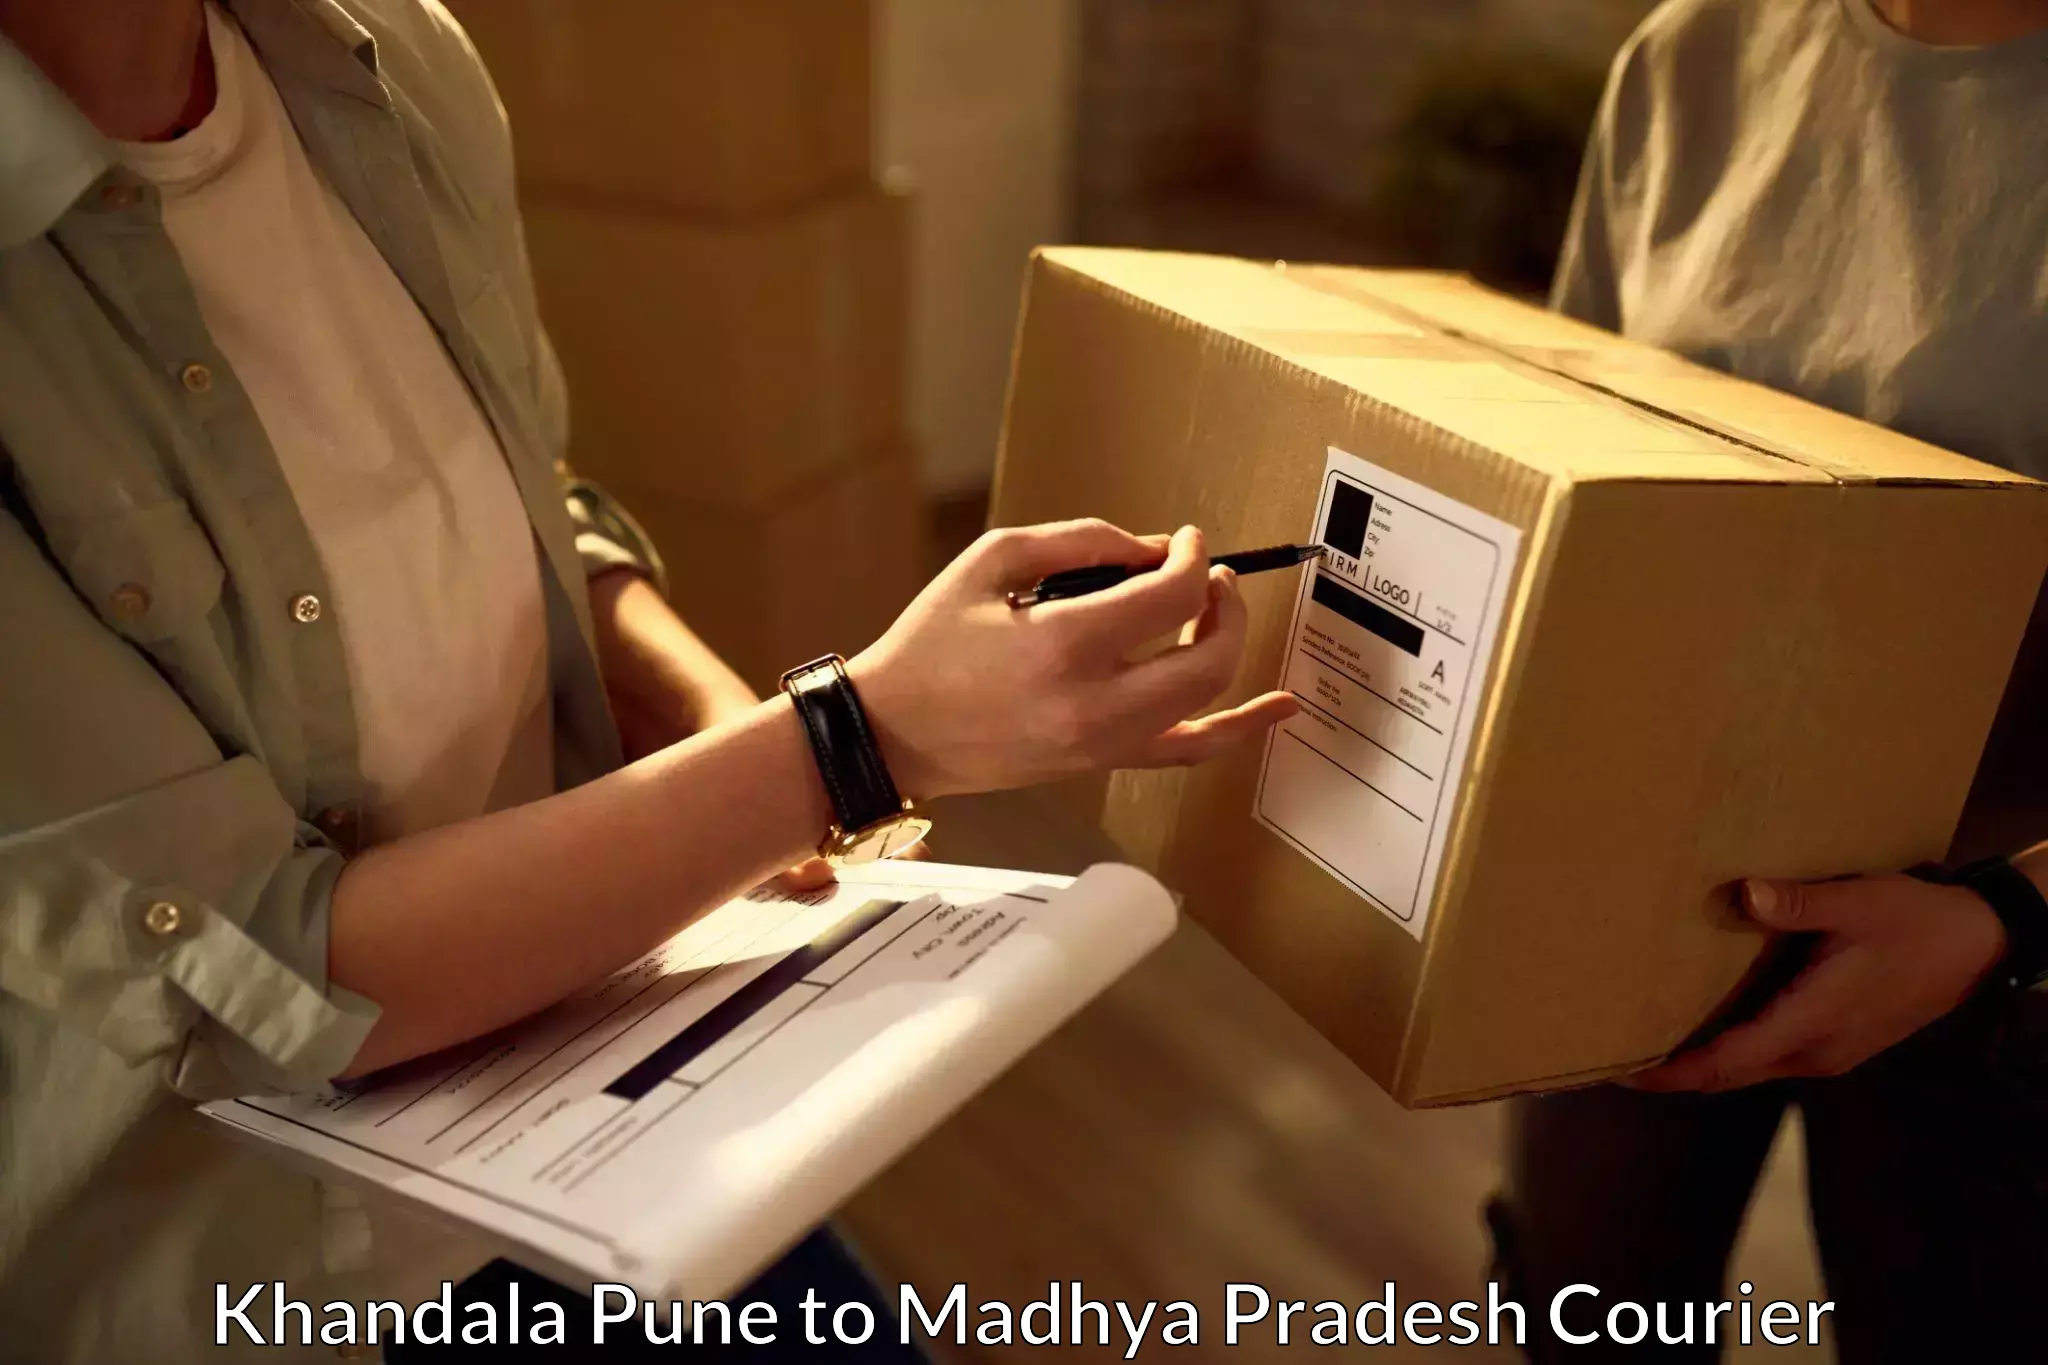 Courier service partnerships Khandala Pune to Waraseoni